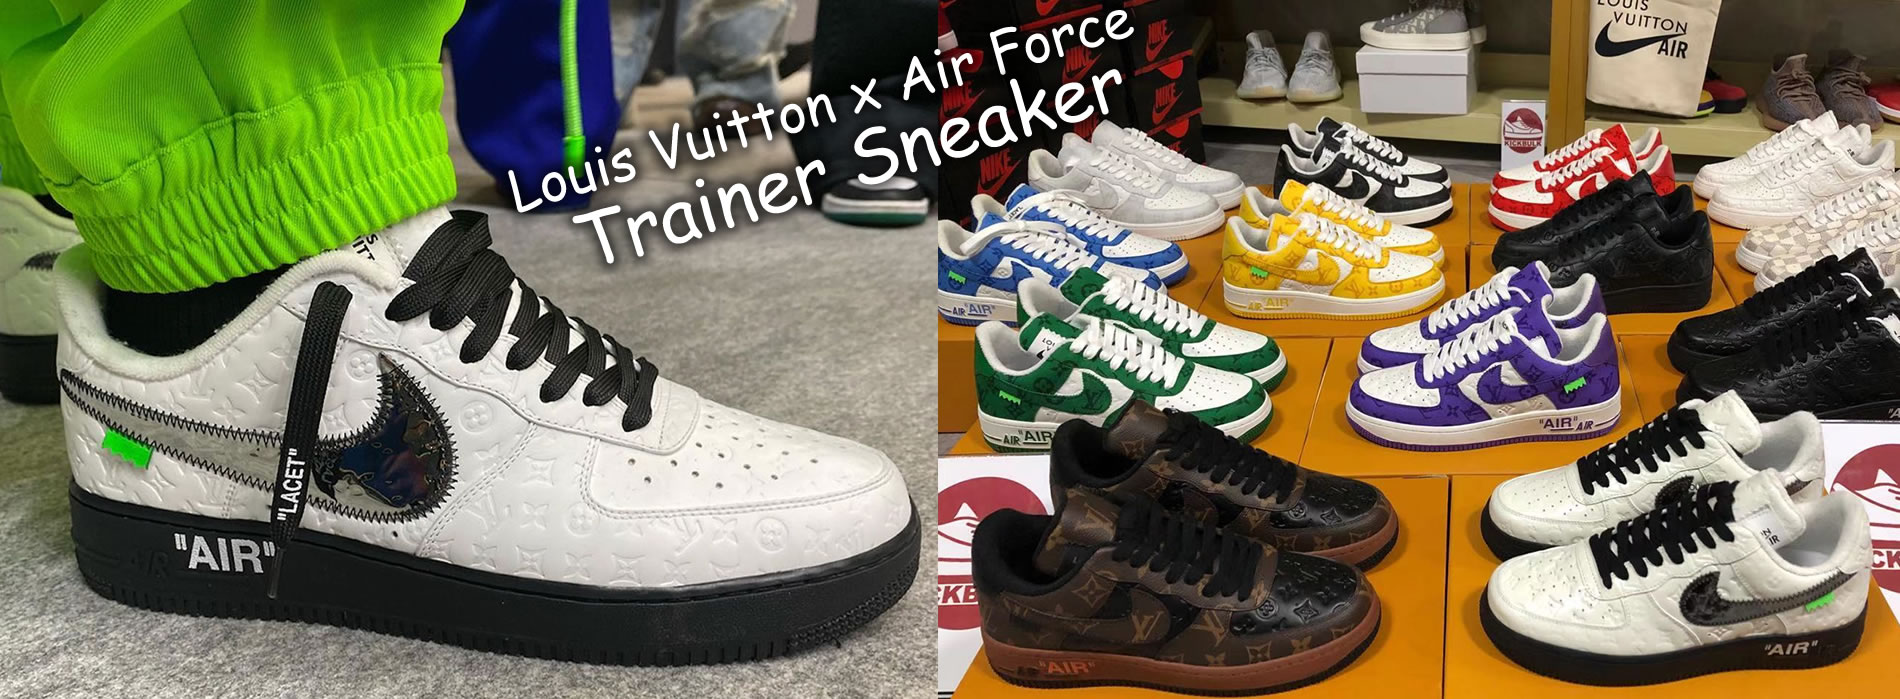 Louis Vuitton x Air Force 1 Trainer Sneaker